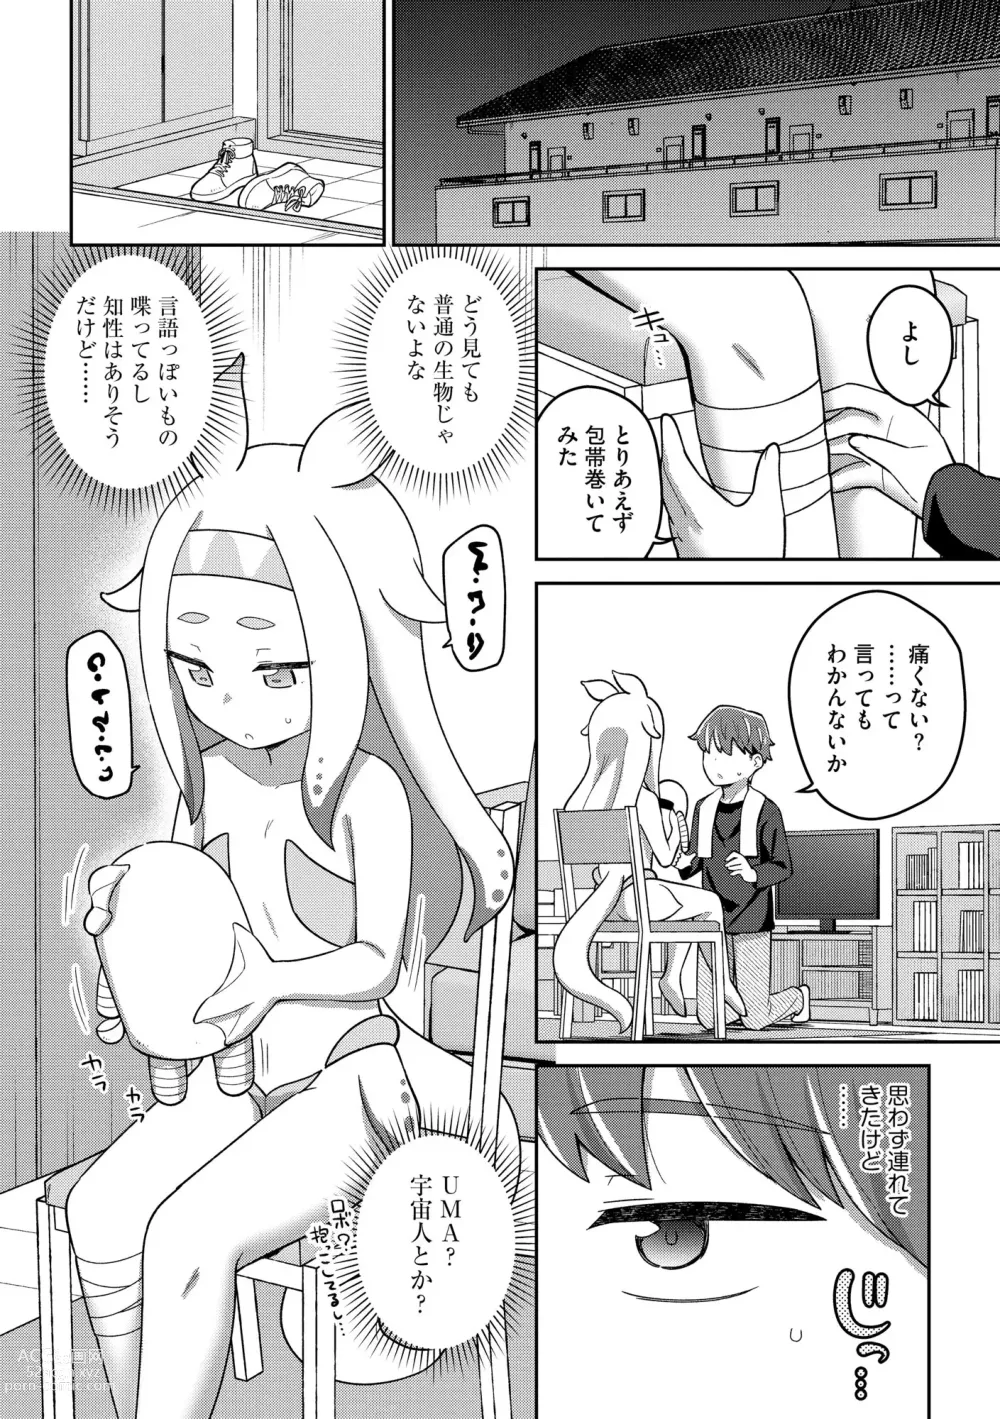 Page 8 of manga Jingai musume mesu ochi choukyou